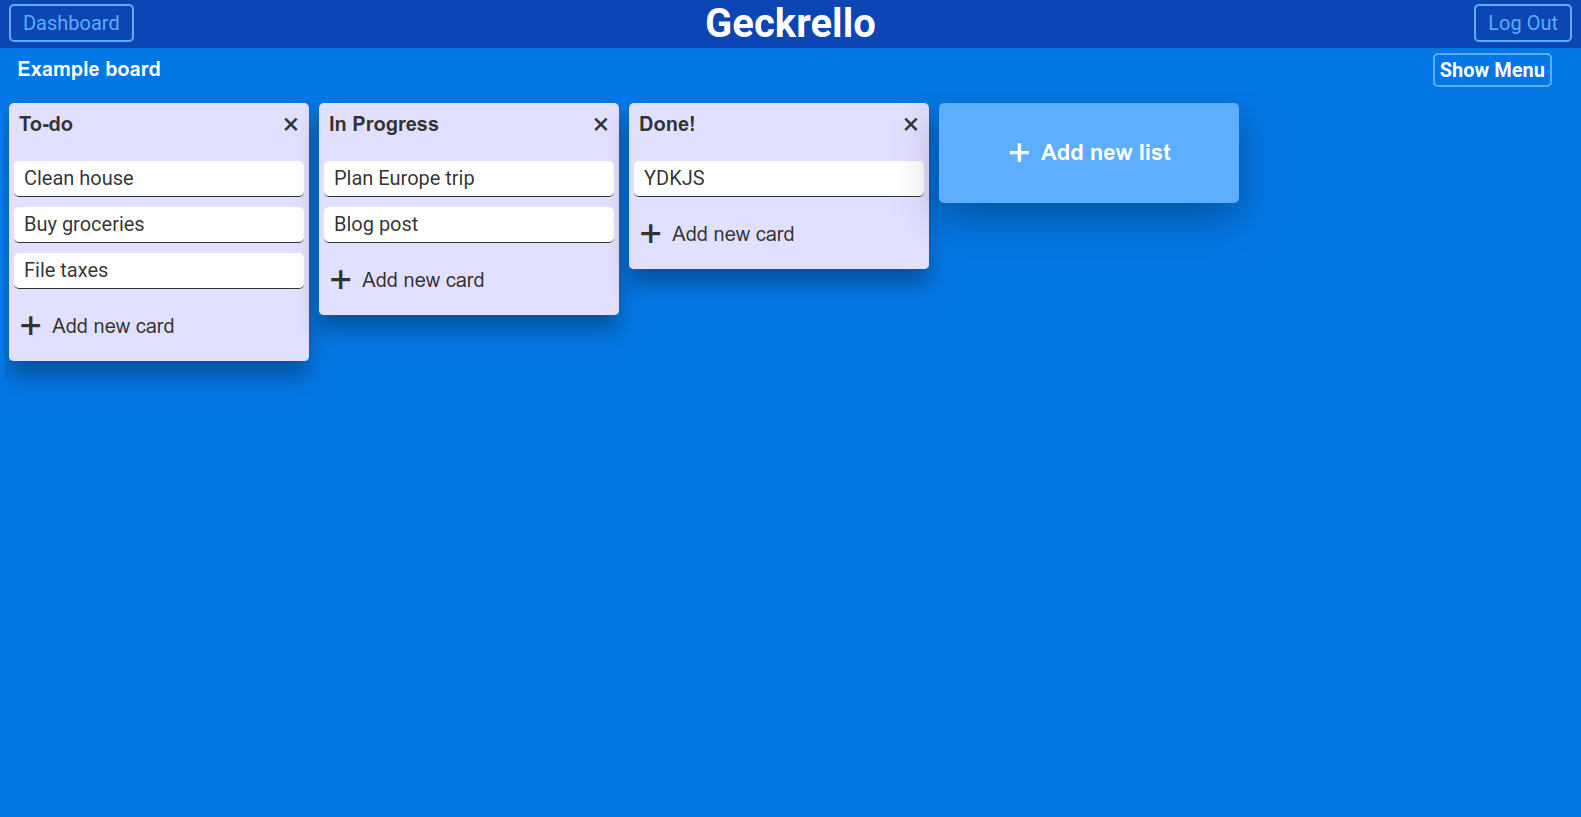 Geckrello board page screenshot